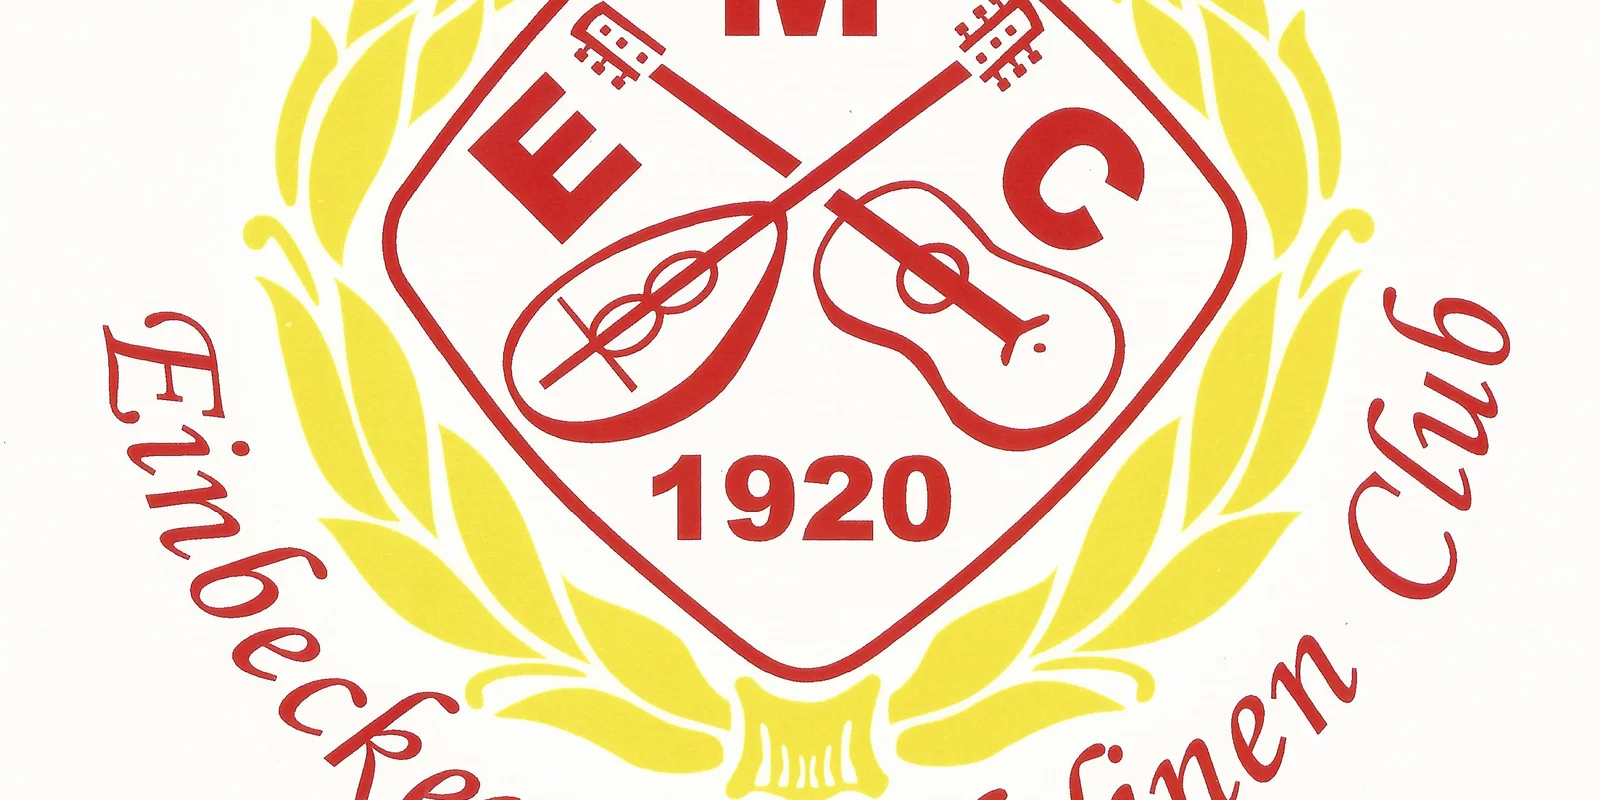 Emblem des Einbecker Mandolinenclubs